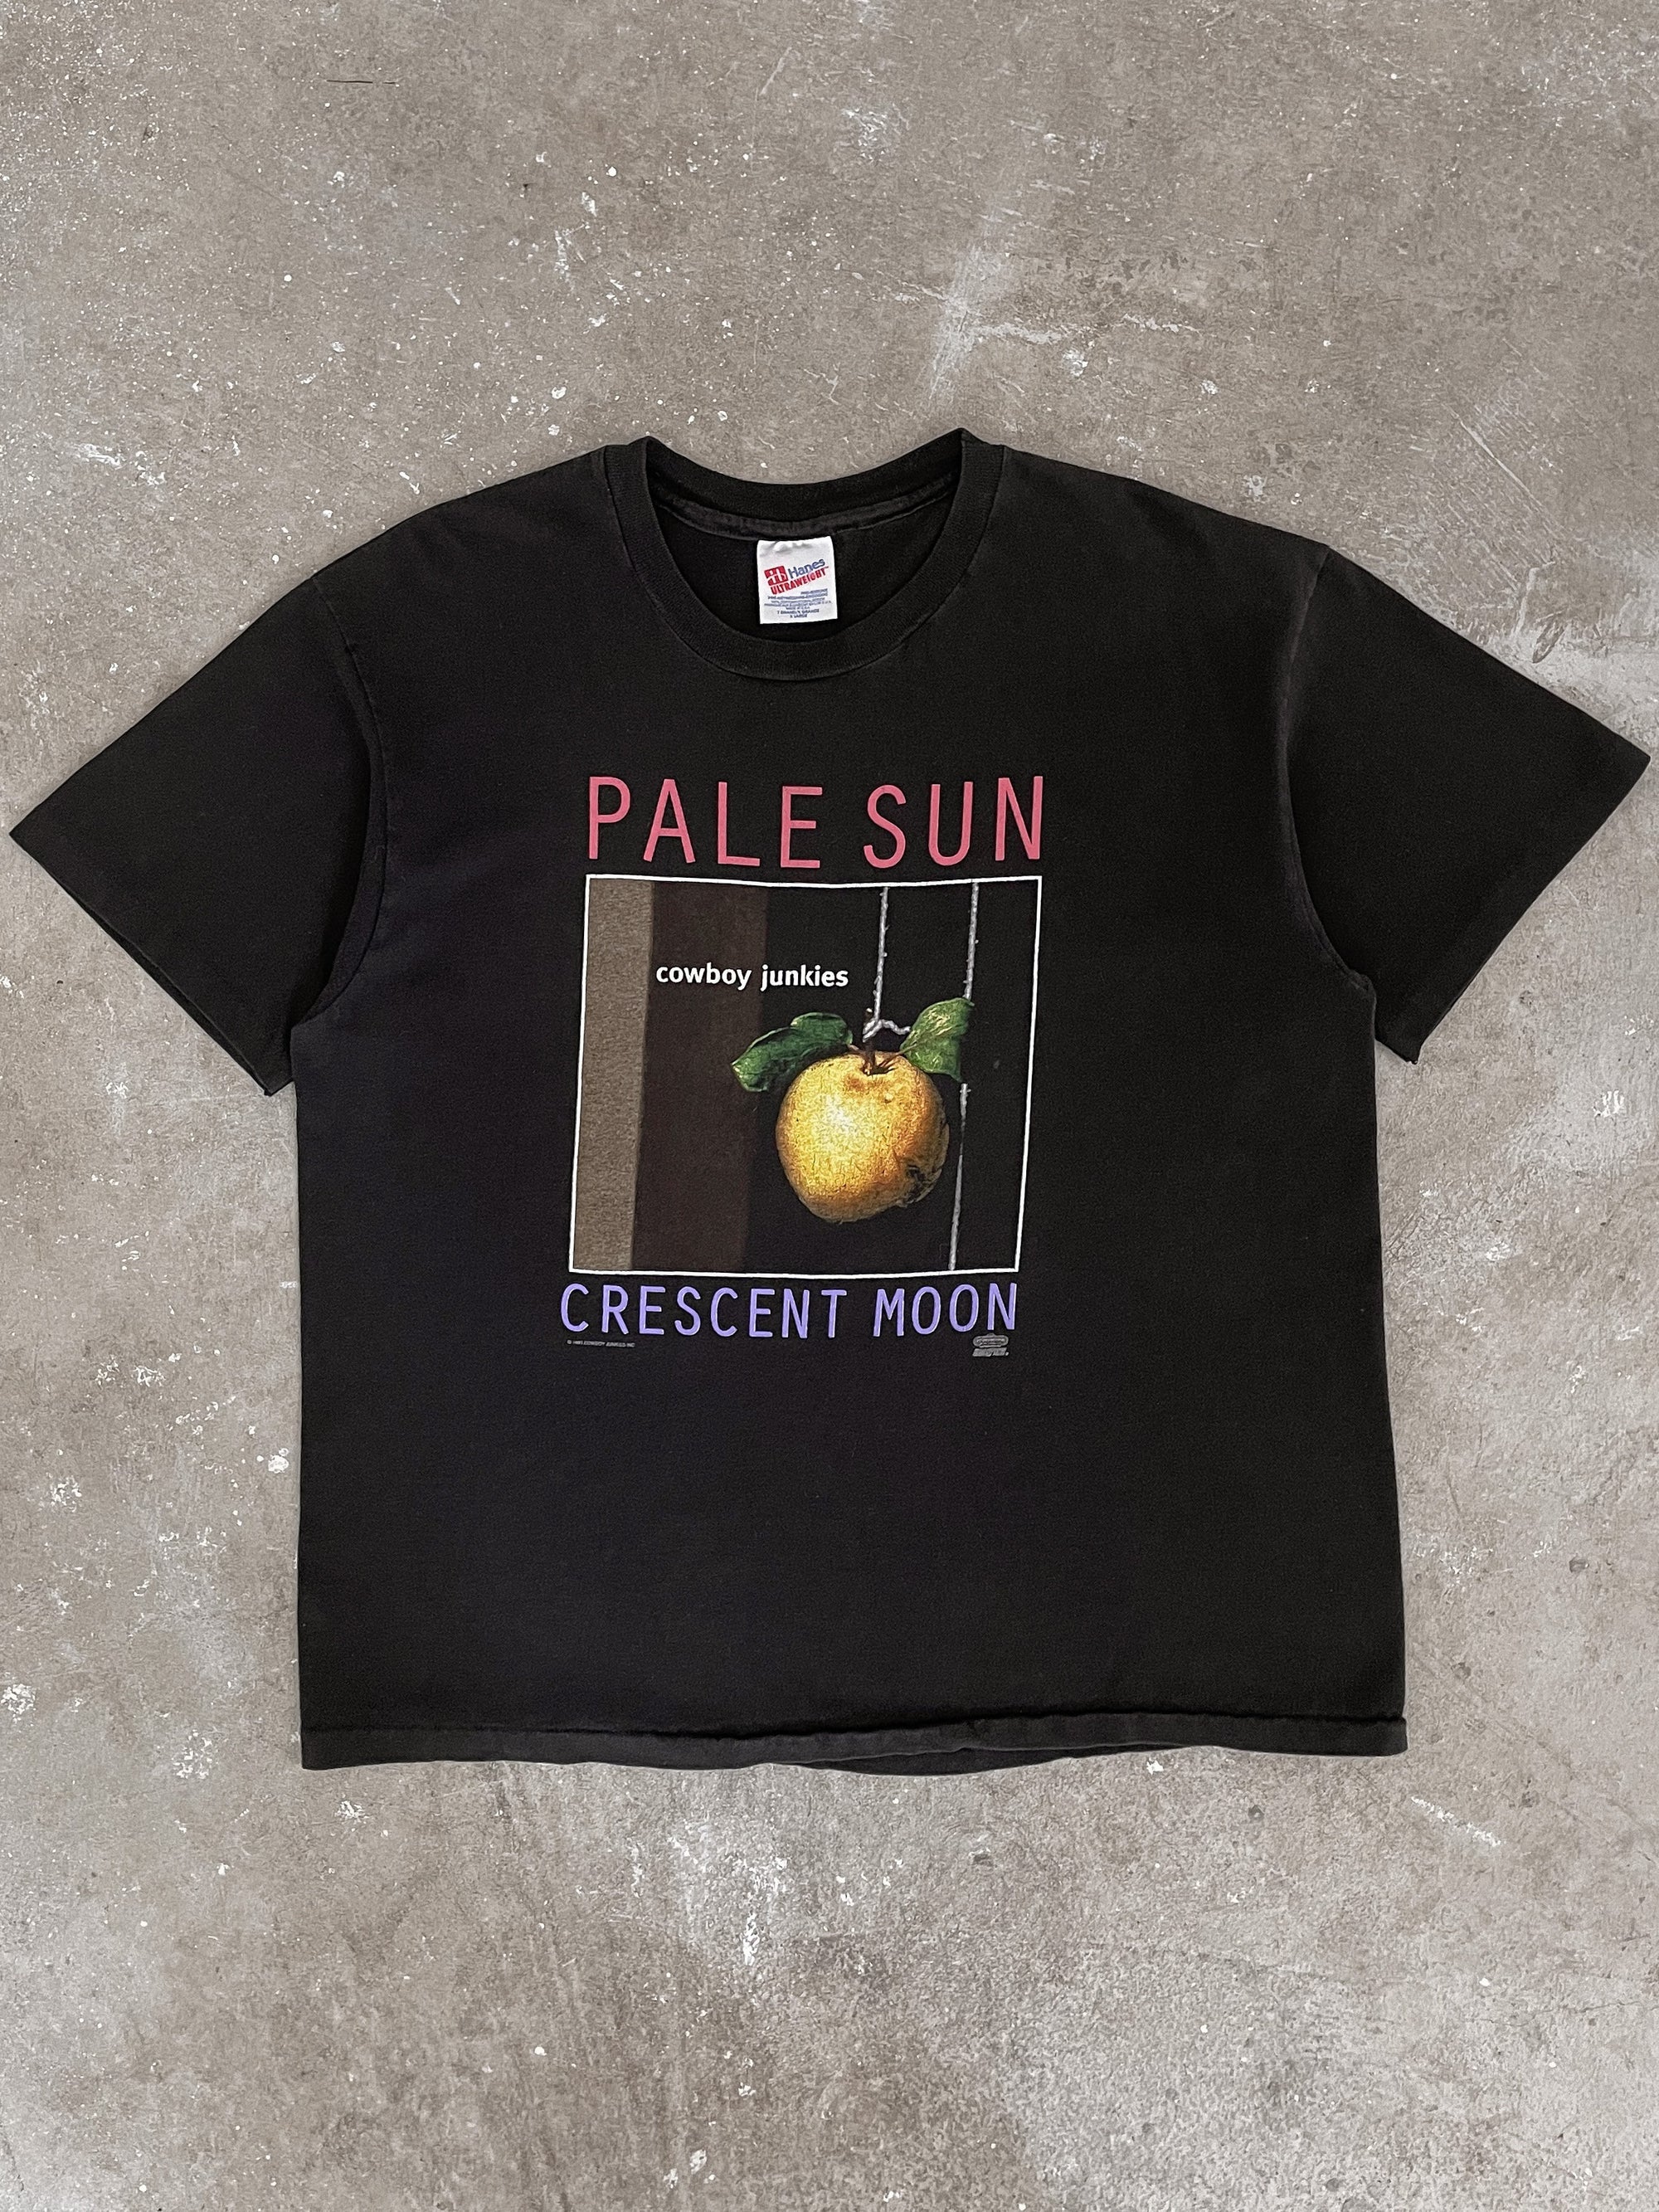 1990s Cowboy Junkies “Pale Sun Crescent Moon” Band Tee (L/XL)